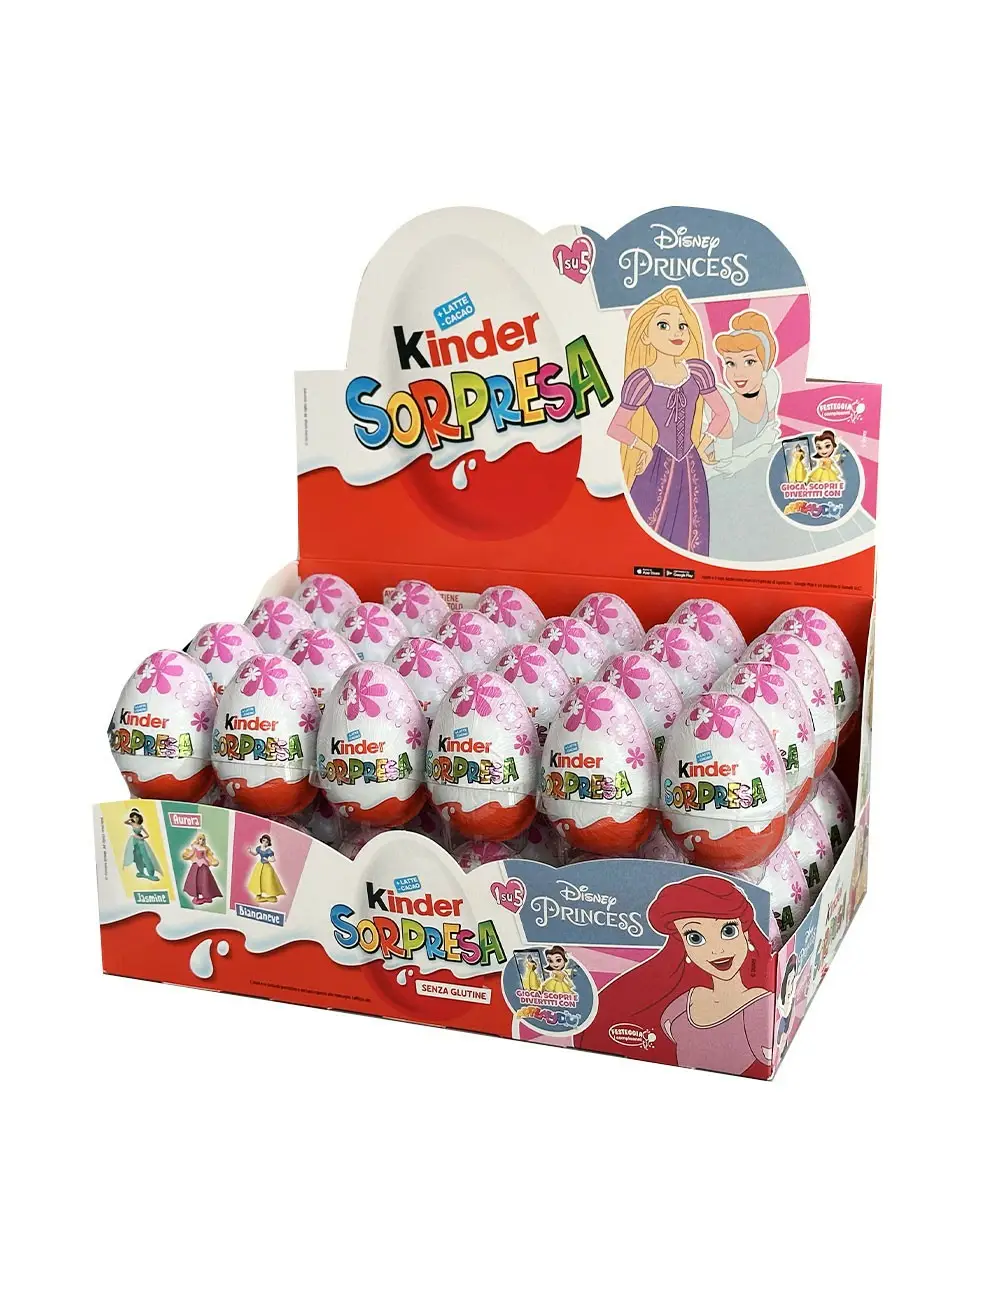 Kinder eggs surprise Disney Princess pack of 48 eggs